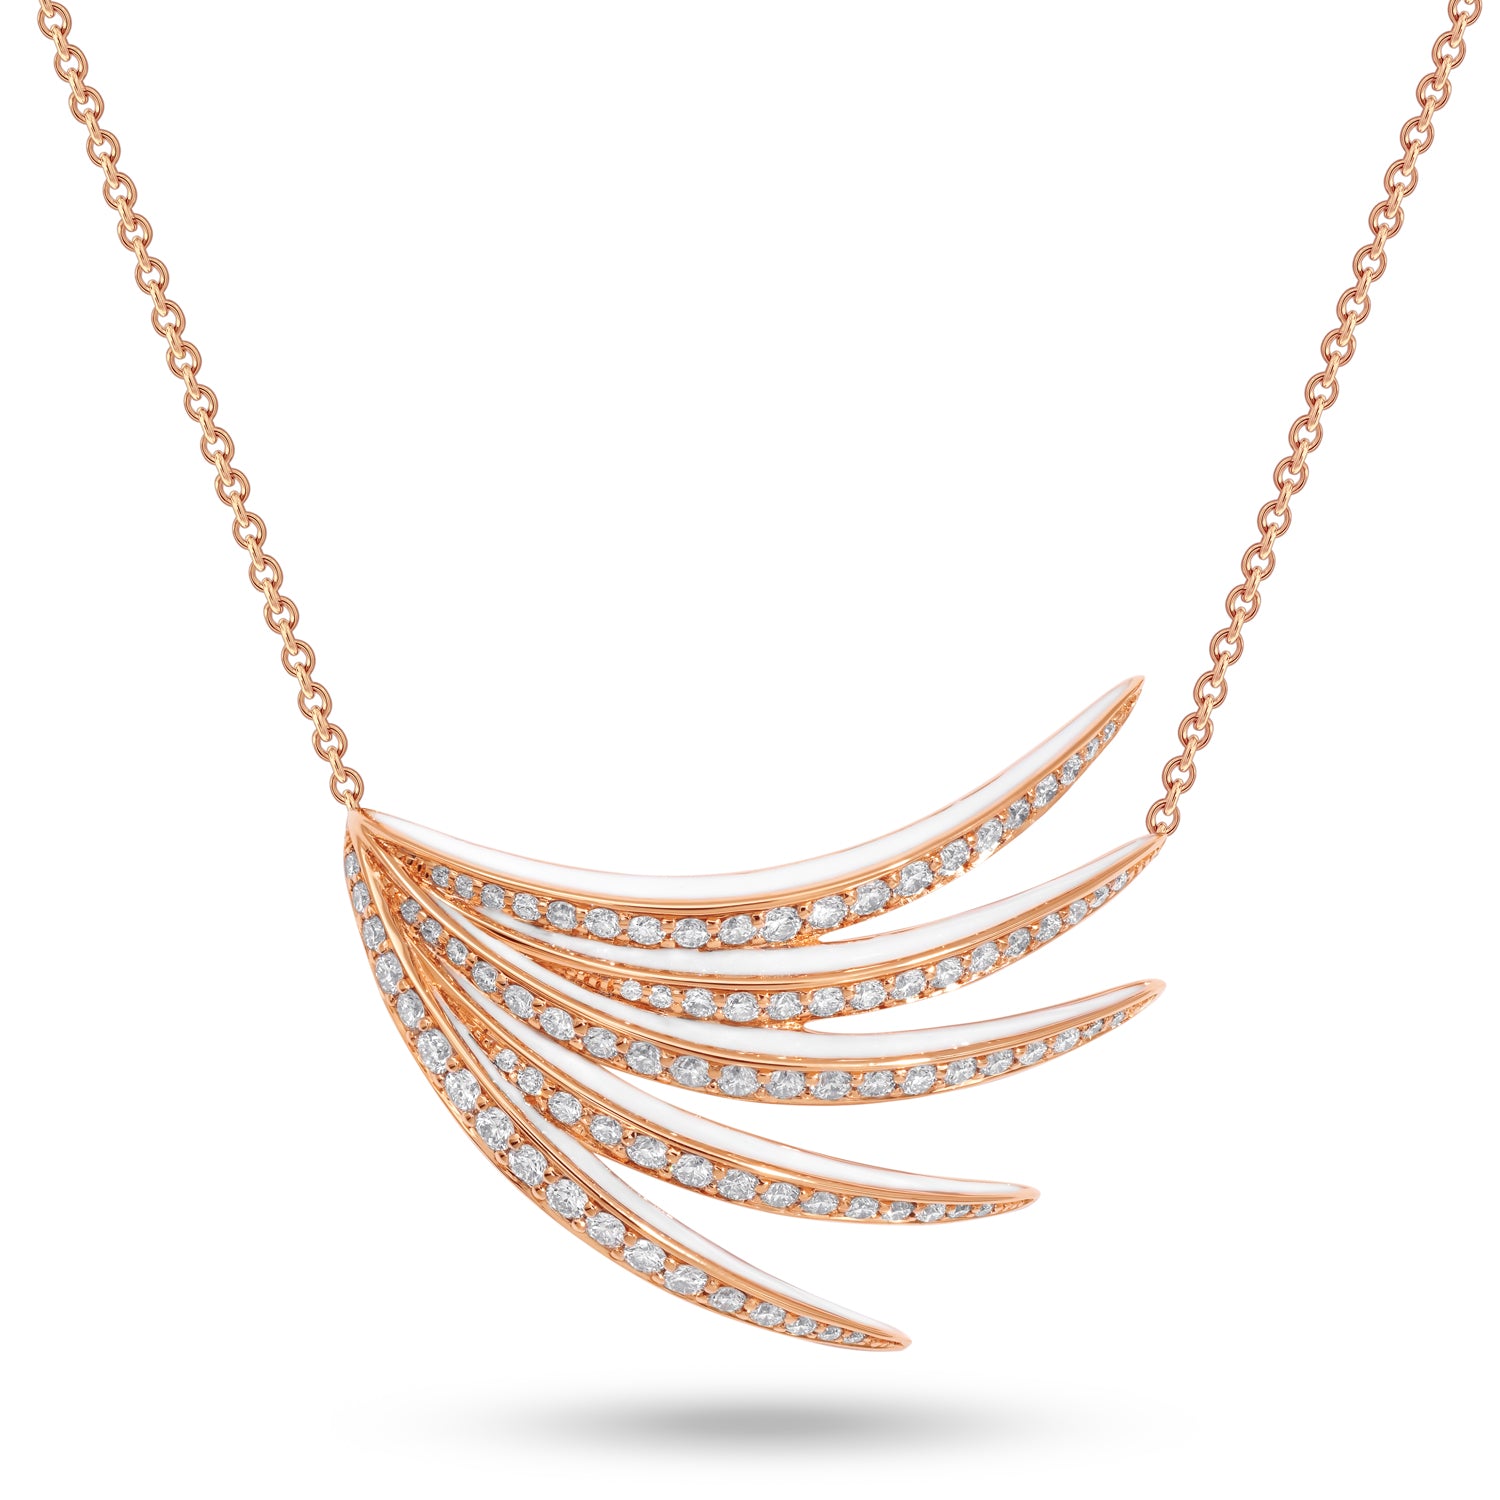 VIVA Necklace with Diamonds and White Enamel